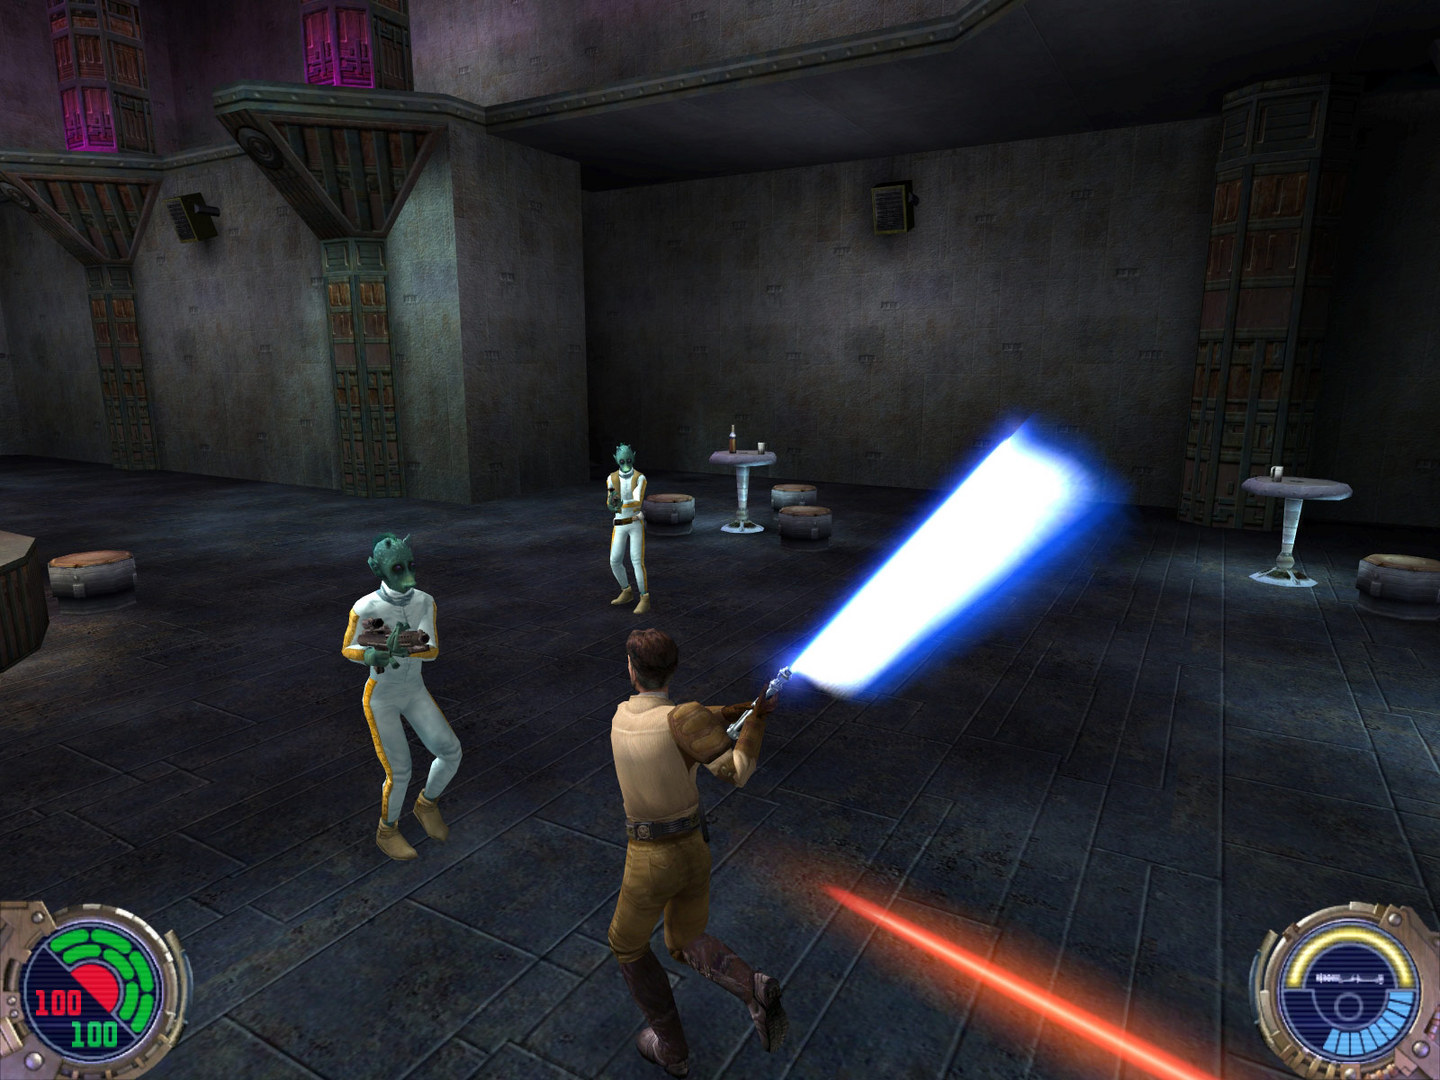 Screenshot: game-images/Star_Wars_Jedi_Knight_Collection_screenshots_661936.jpg